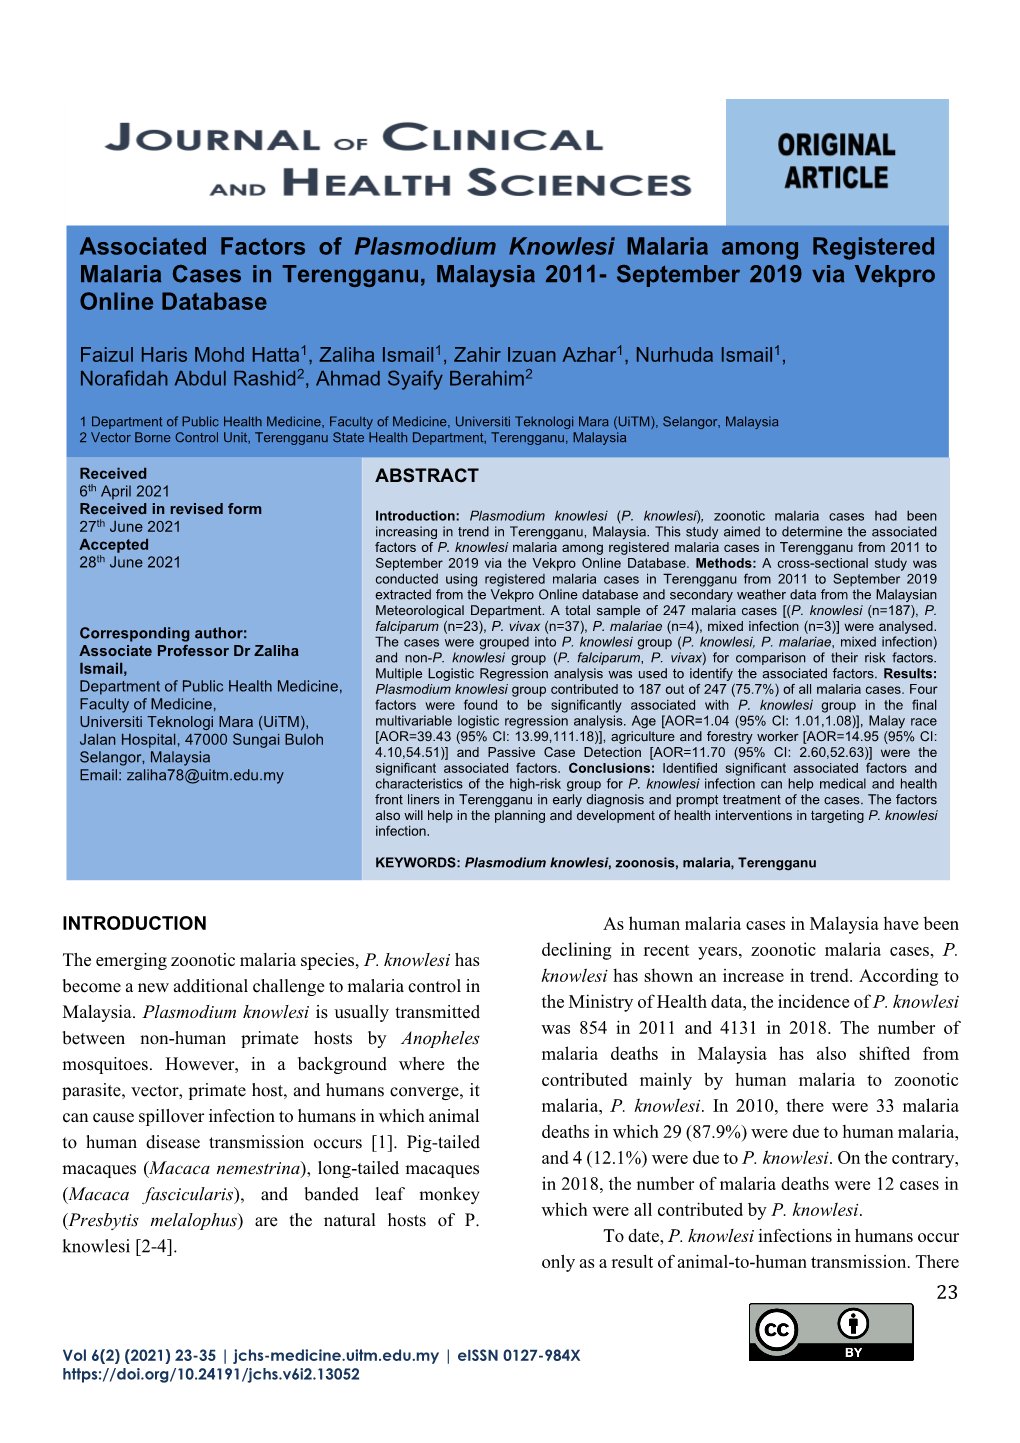 Associated Factors of Plasmodium Knowlesi Malaria Among Registered Malaria Cases in Terengganu, Malaysia 2011- September 2019 Via Vekpro Online Database